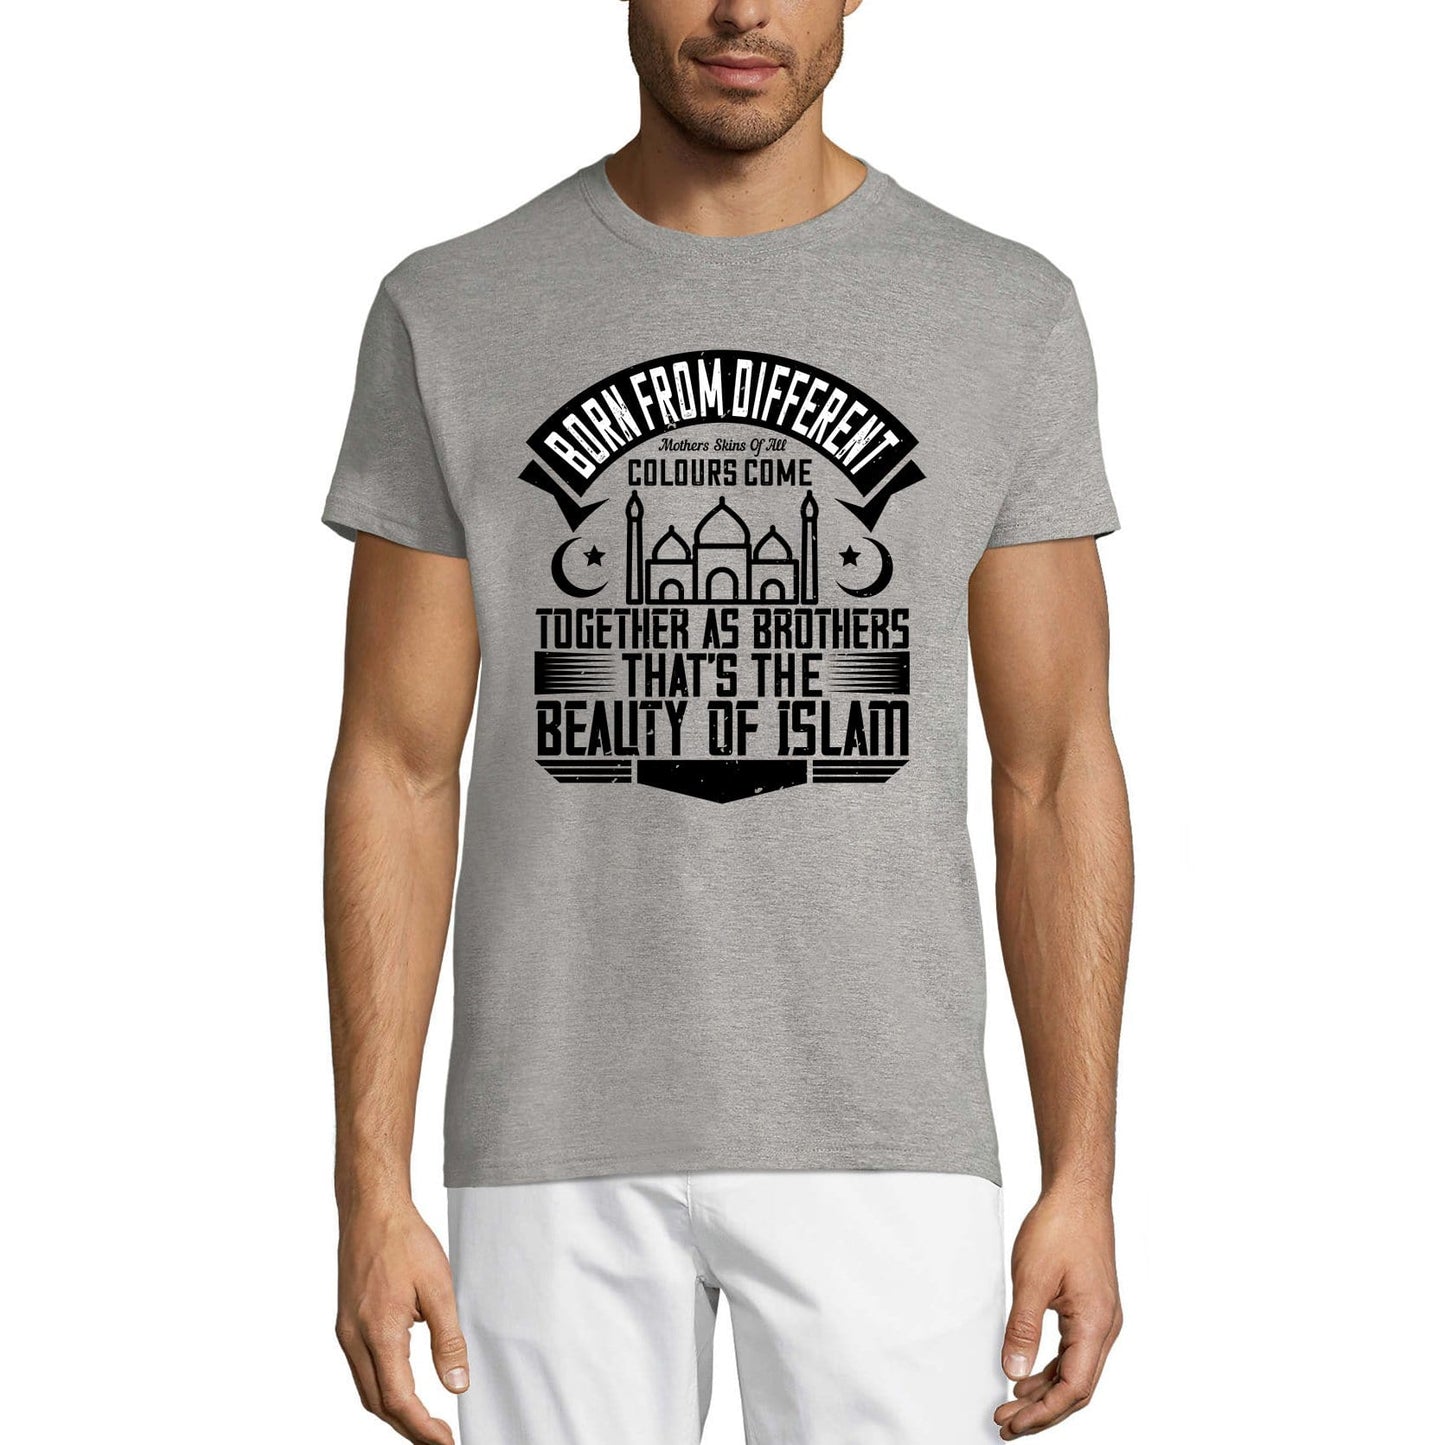 ULTRABASIC Men's T-Shirt Beauty of Islam - Muslim Tee Shirt